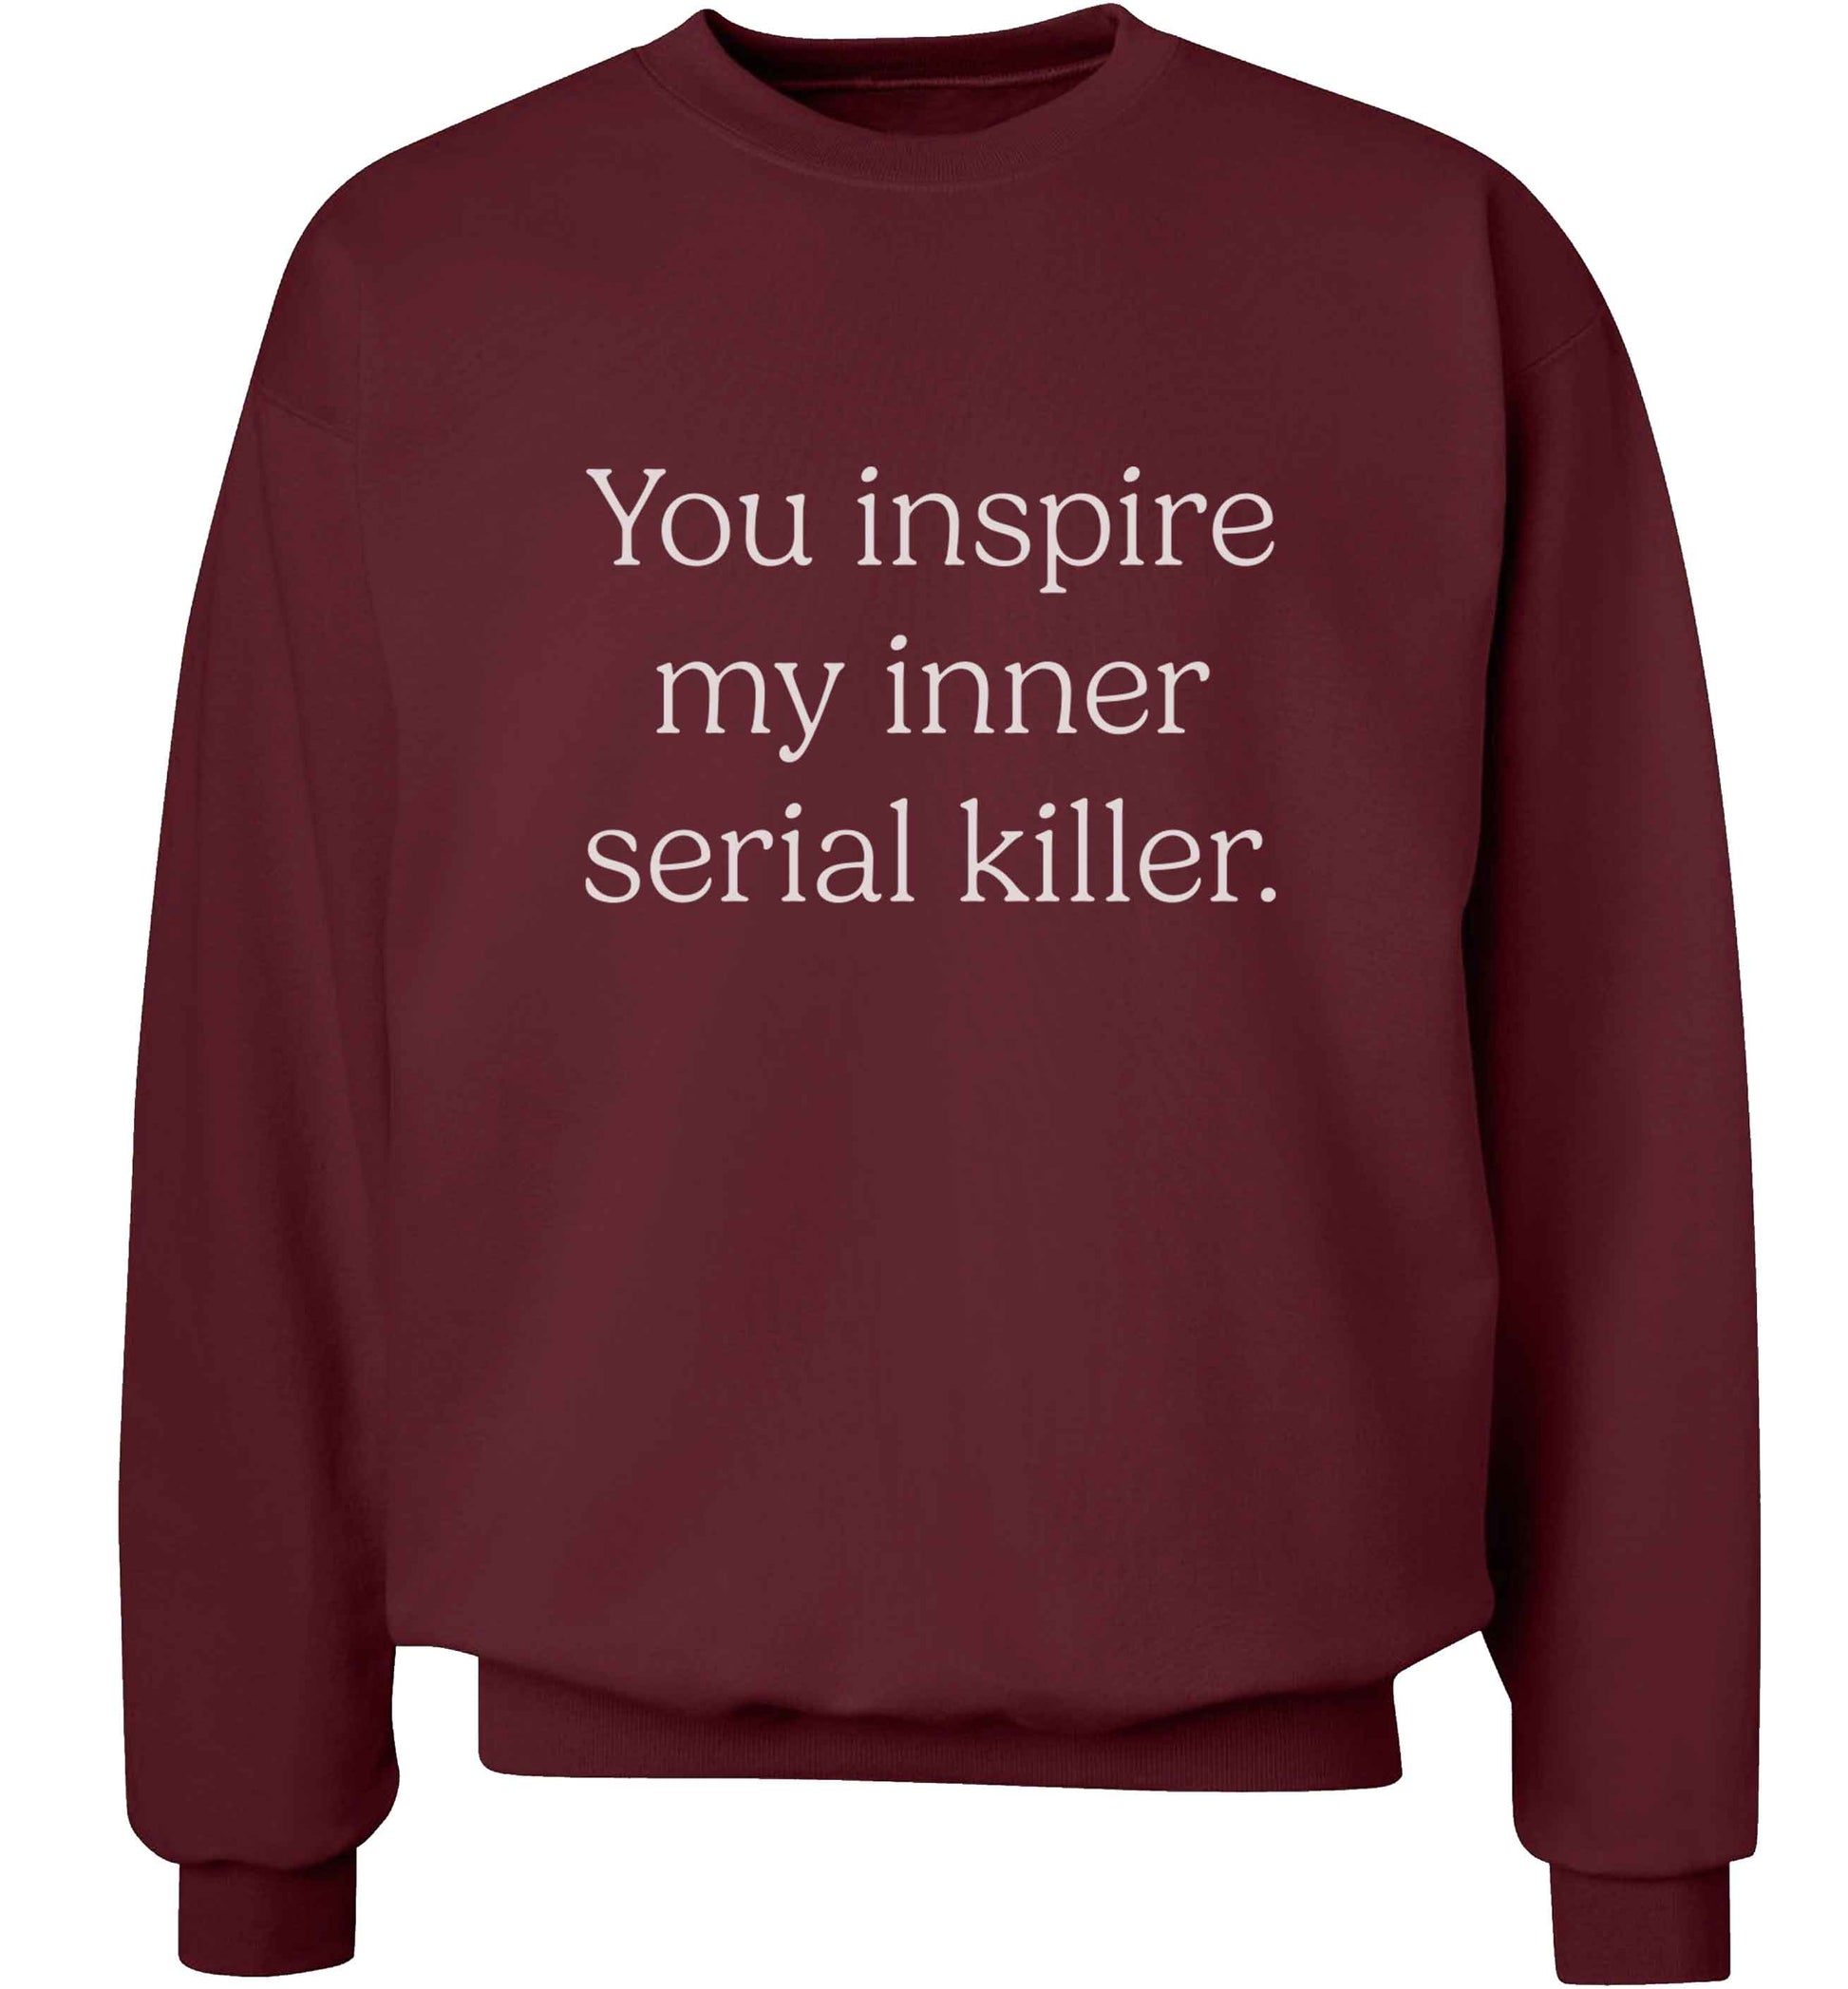 You inspire my inner serial killer Kit adult's unisex maroon sweater 2XL